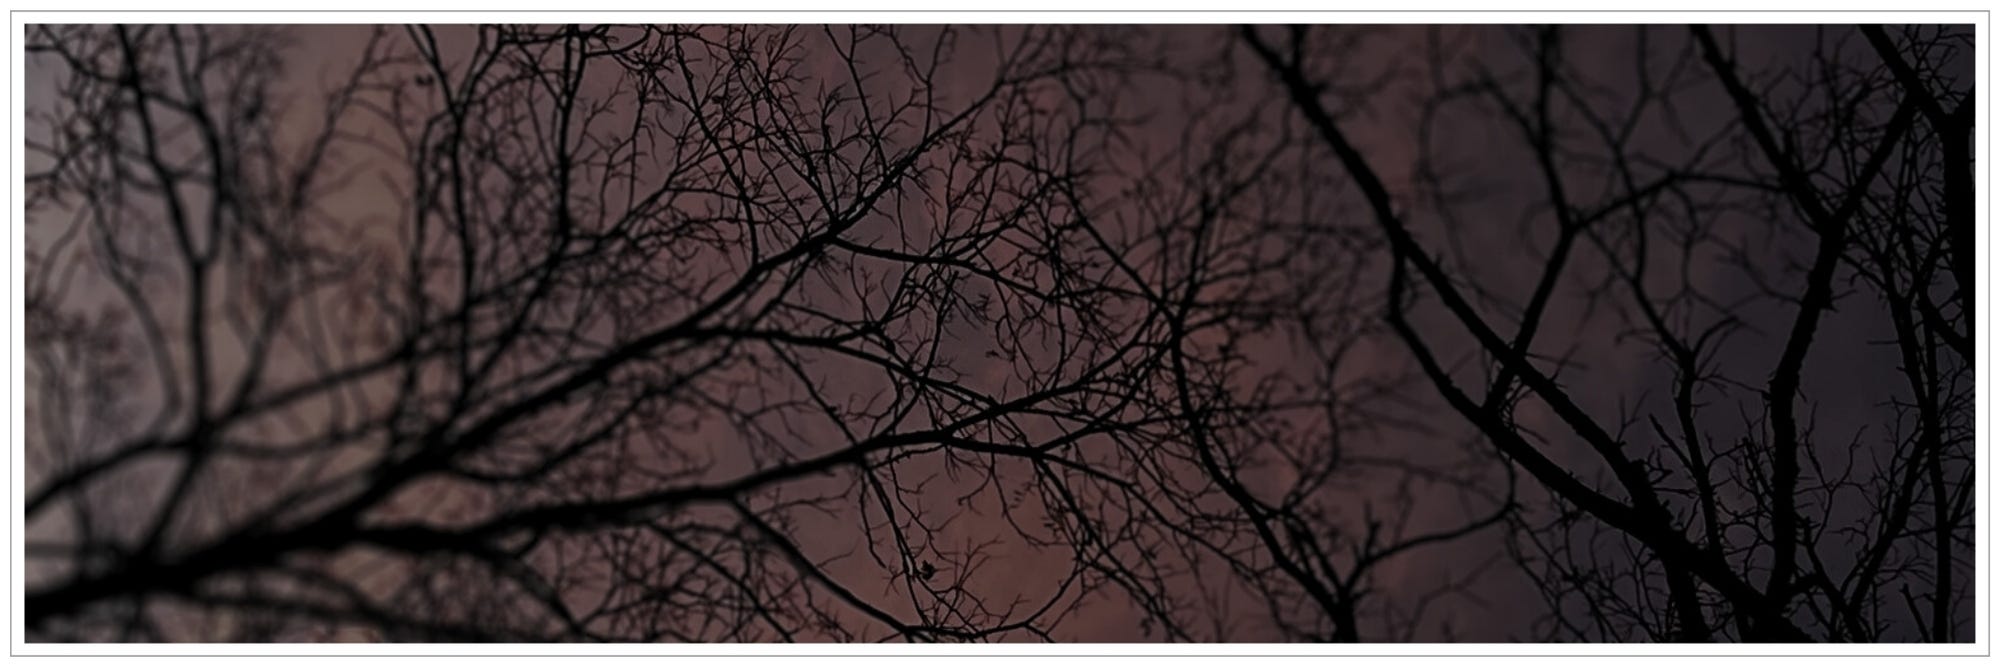 Pre-dawn sky through trees